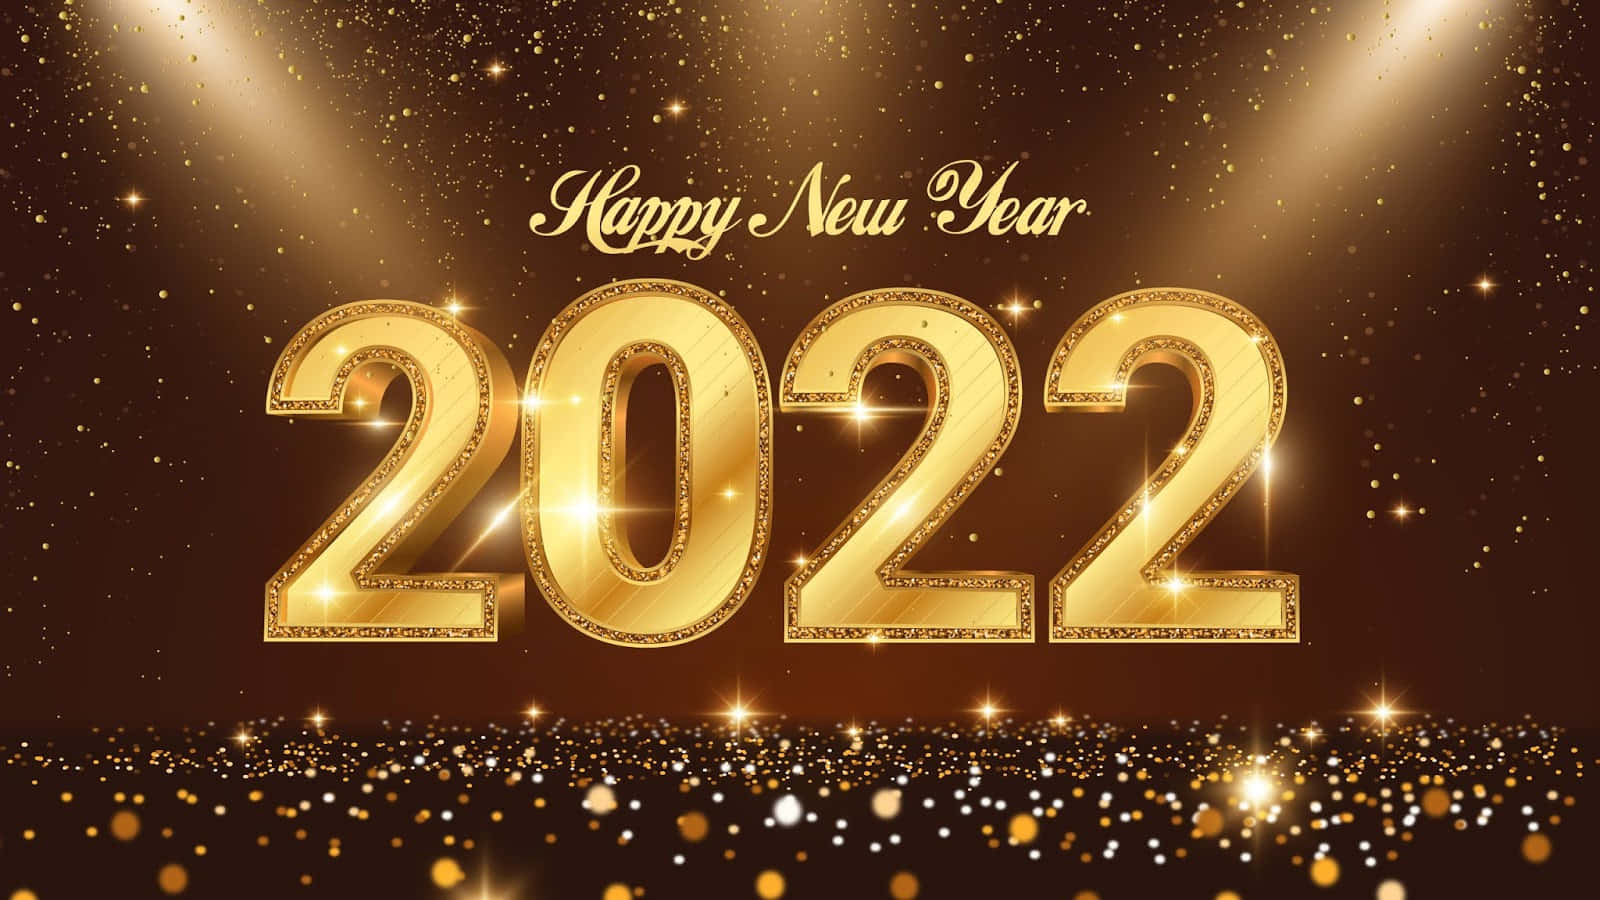 "Happy New Year 2022!"